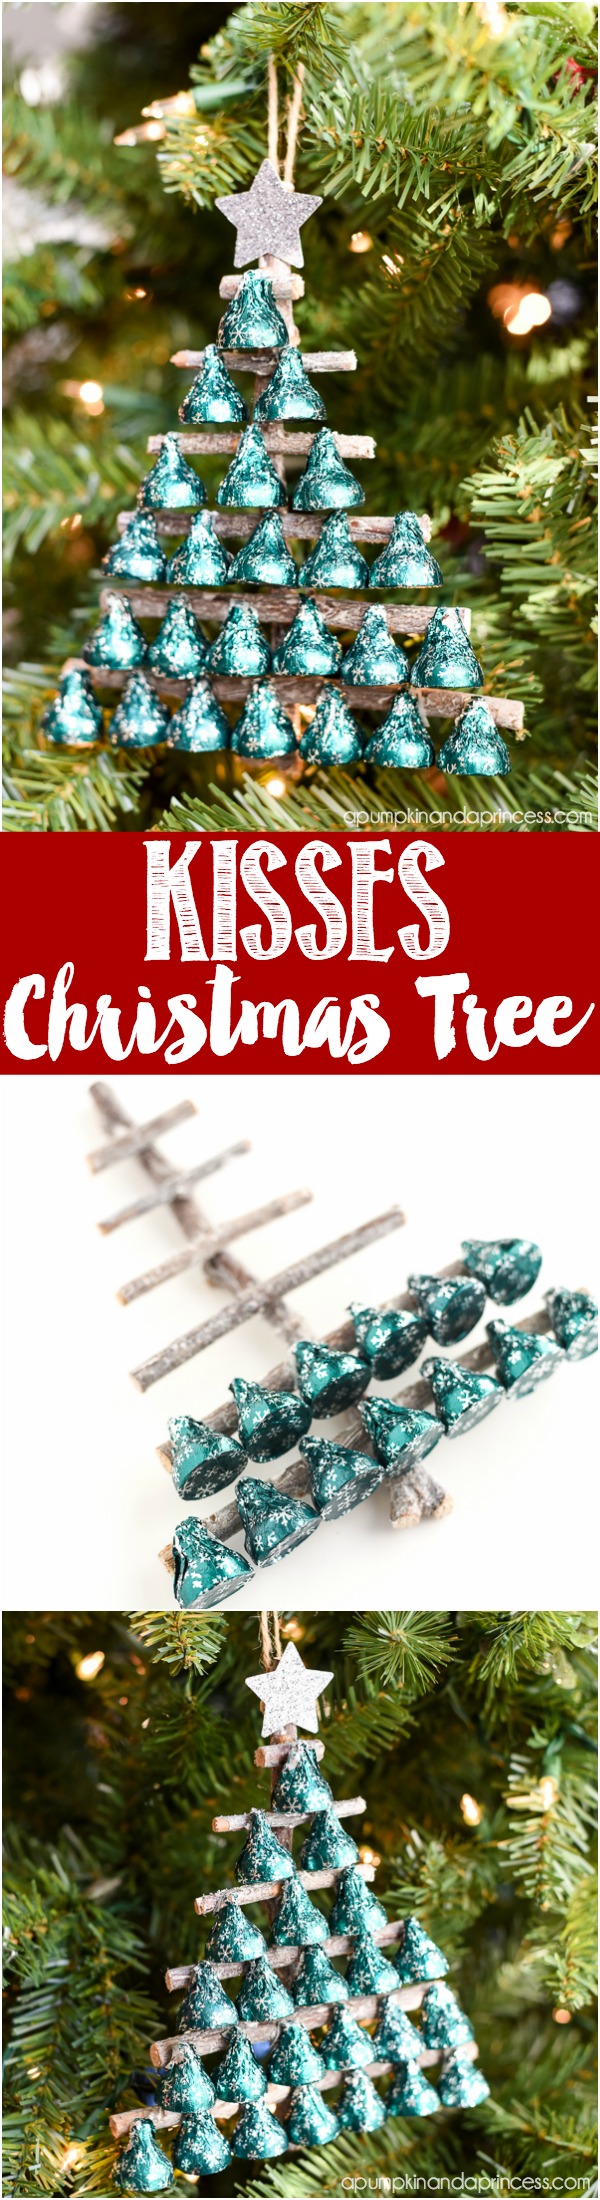 DIY KISSES Candy Christmas Tree - cute neighbor gift or teacher gift idea kids can make.